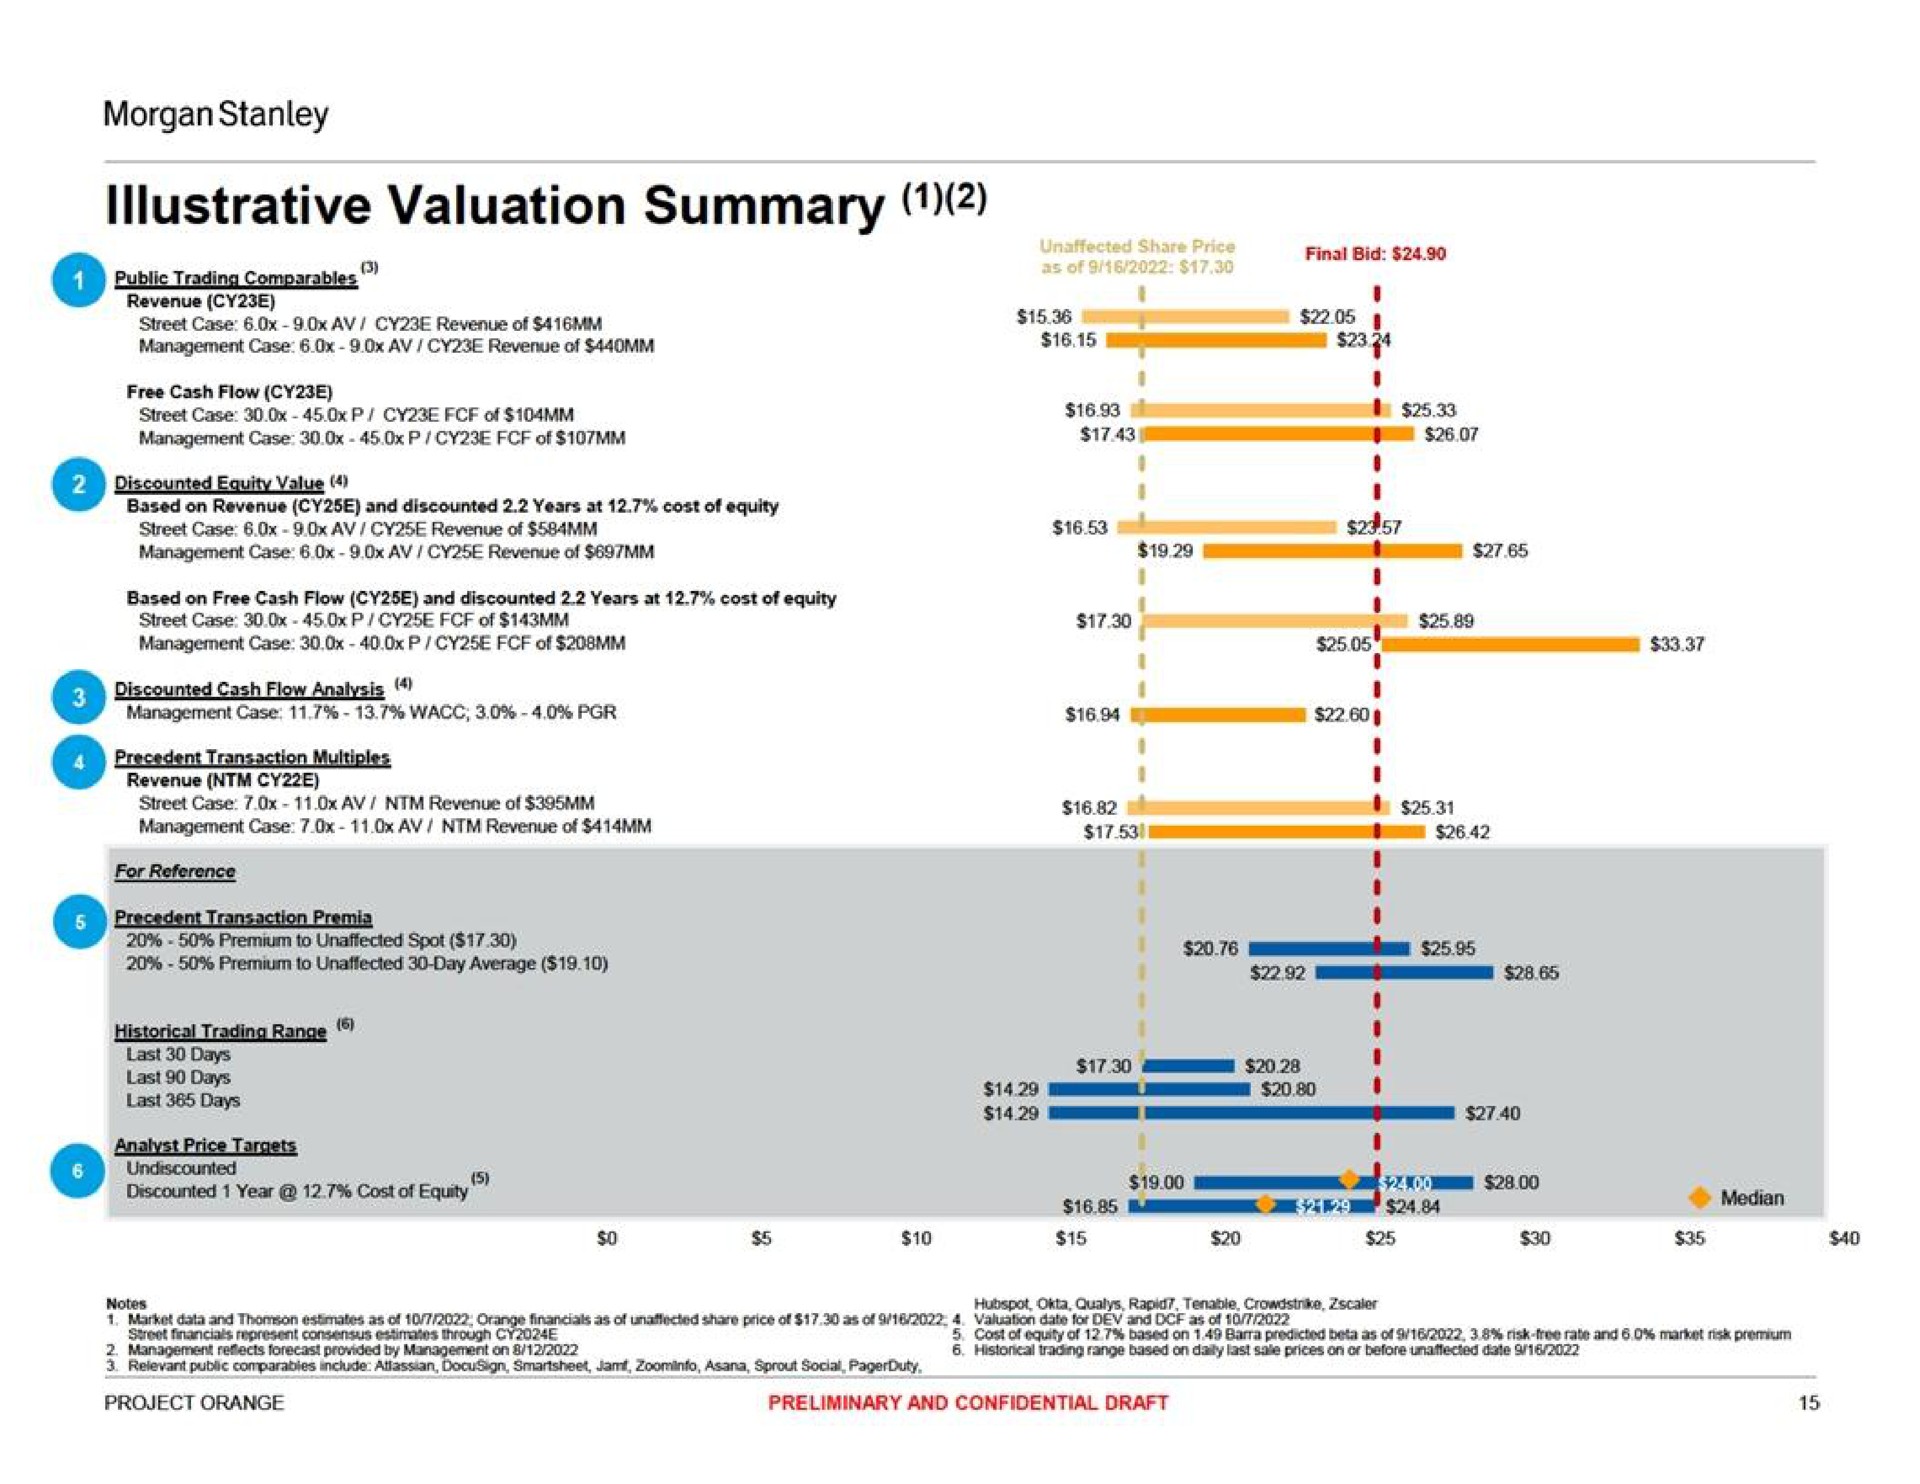 illustrative valuation summary | Morgan Stanley